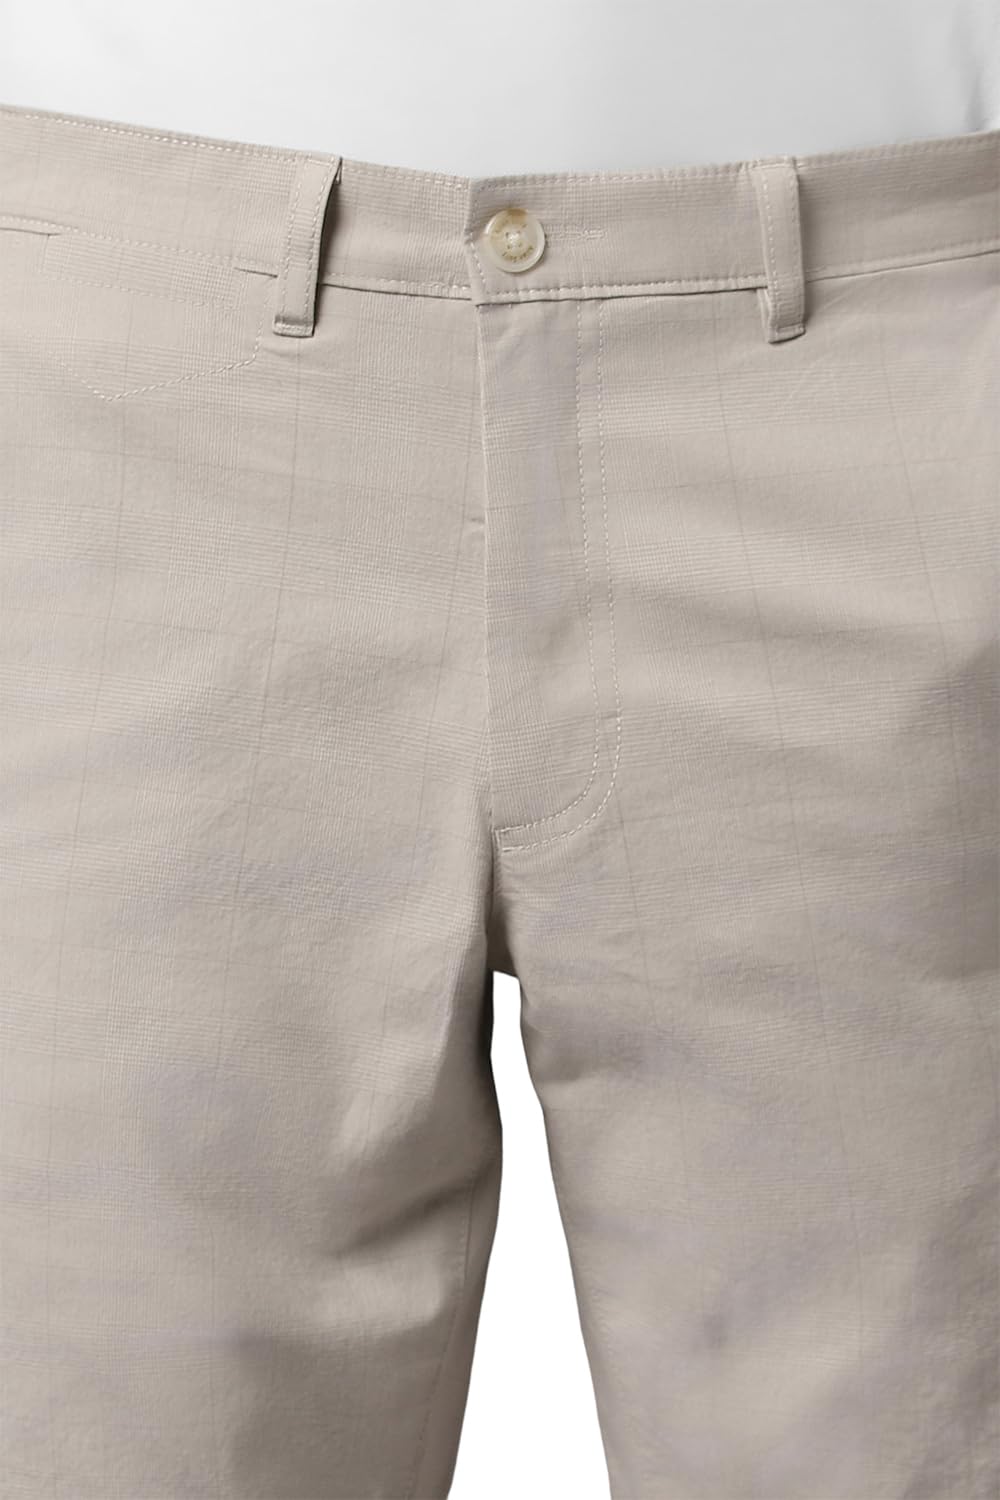 Allen Solly Men's Chino Shorts (Grey)